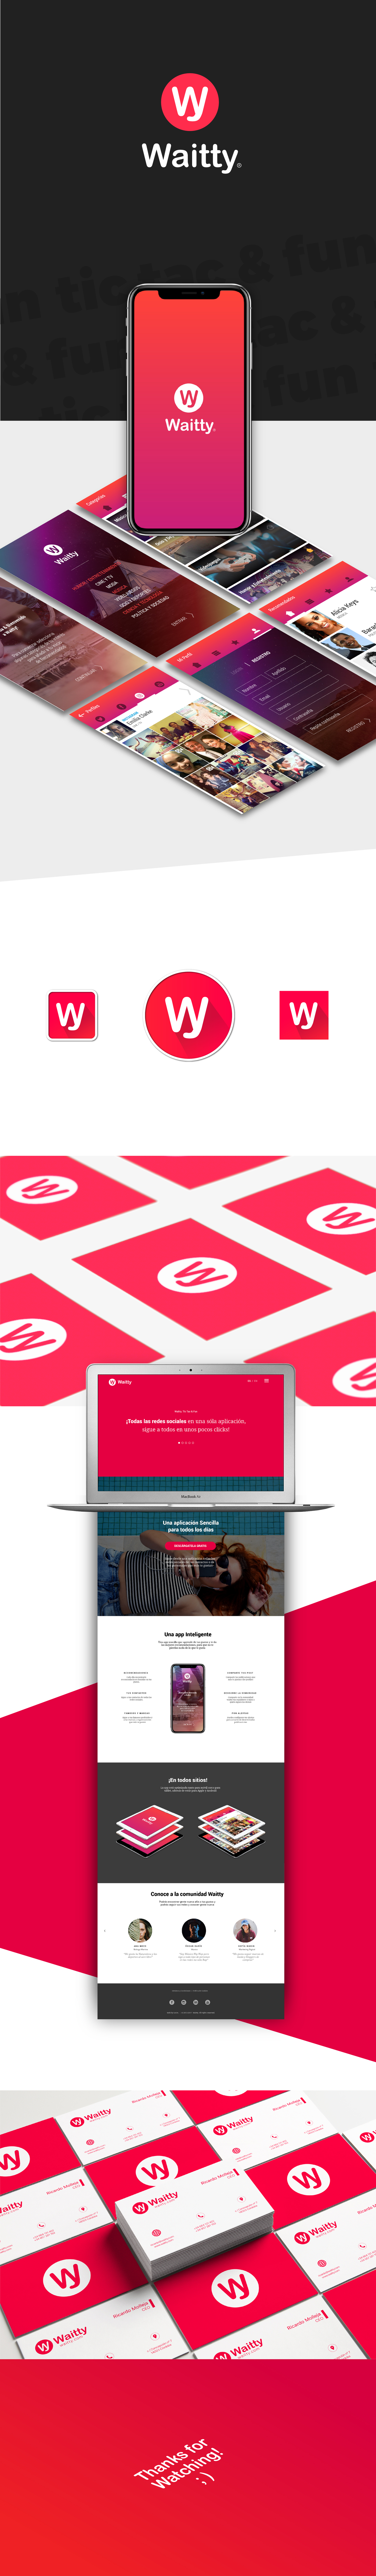 Branding y diseño web para Waitty por Binarid